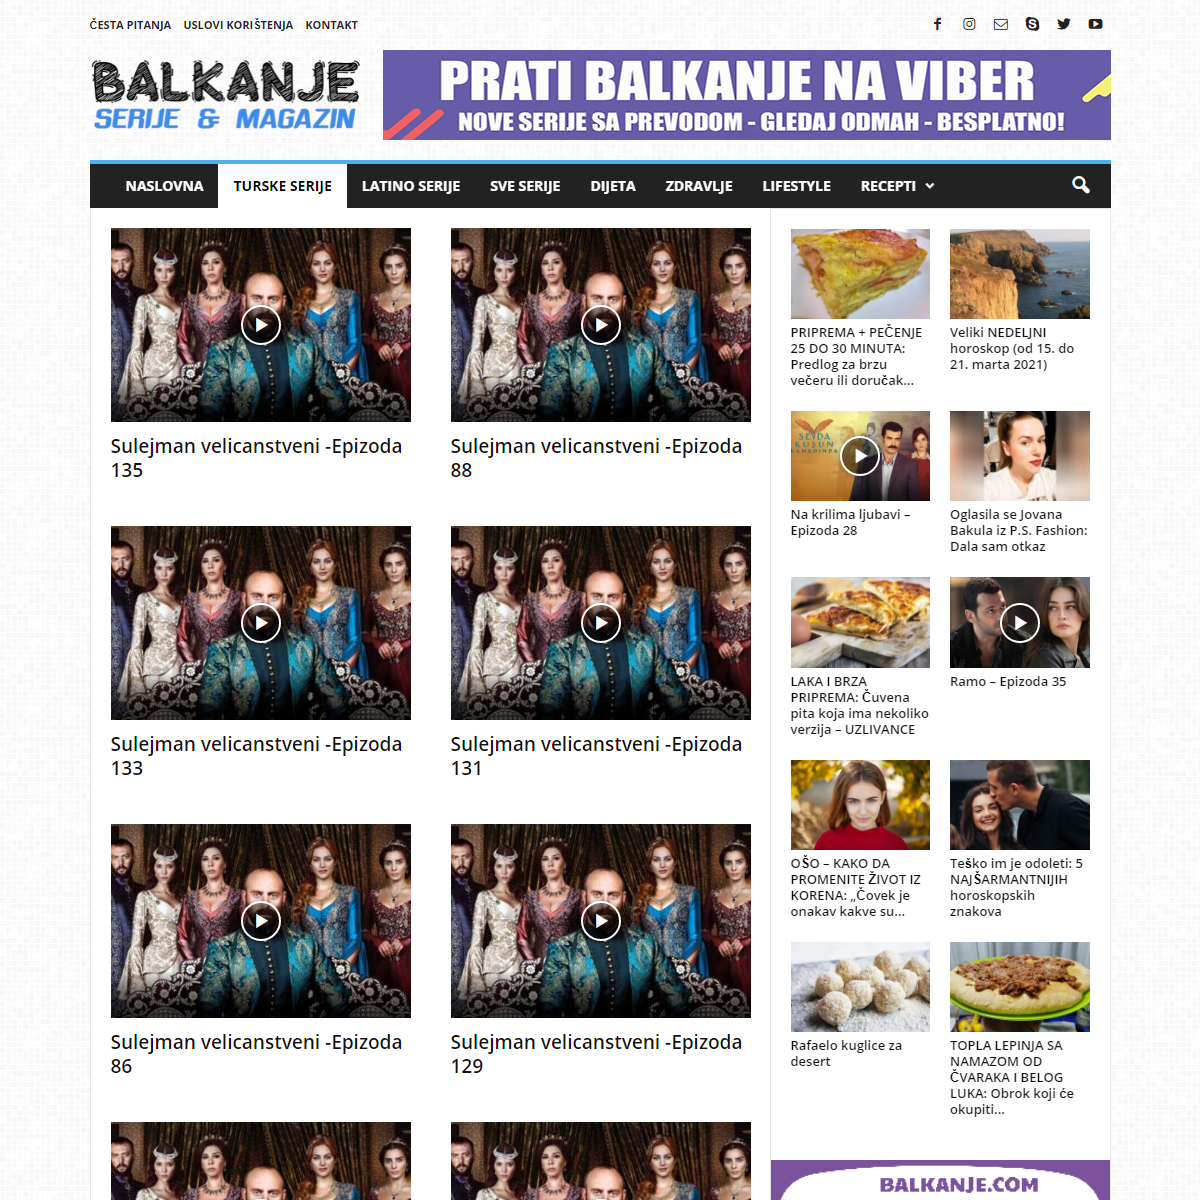 A complete backup of https://balkanje.com/turske-serije/sulejman-velicanstveni/page/3/